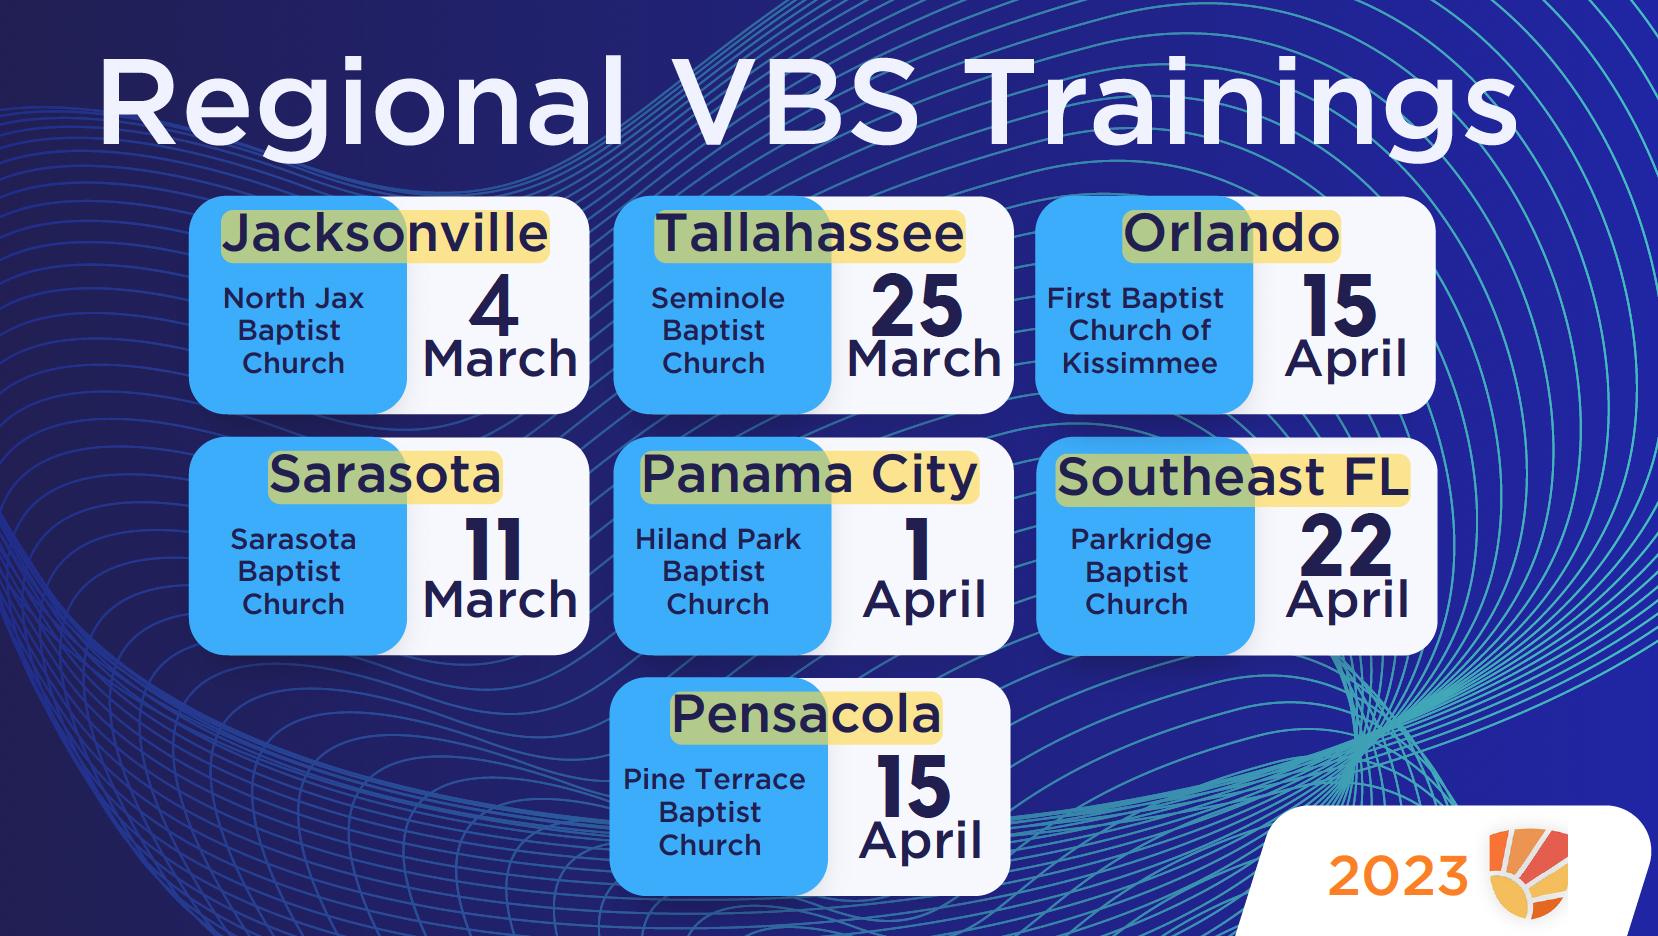 Vacation Bible School, VBS Training